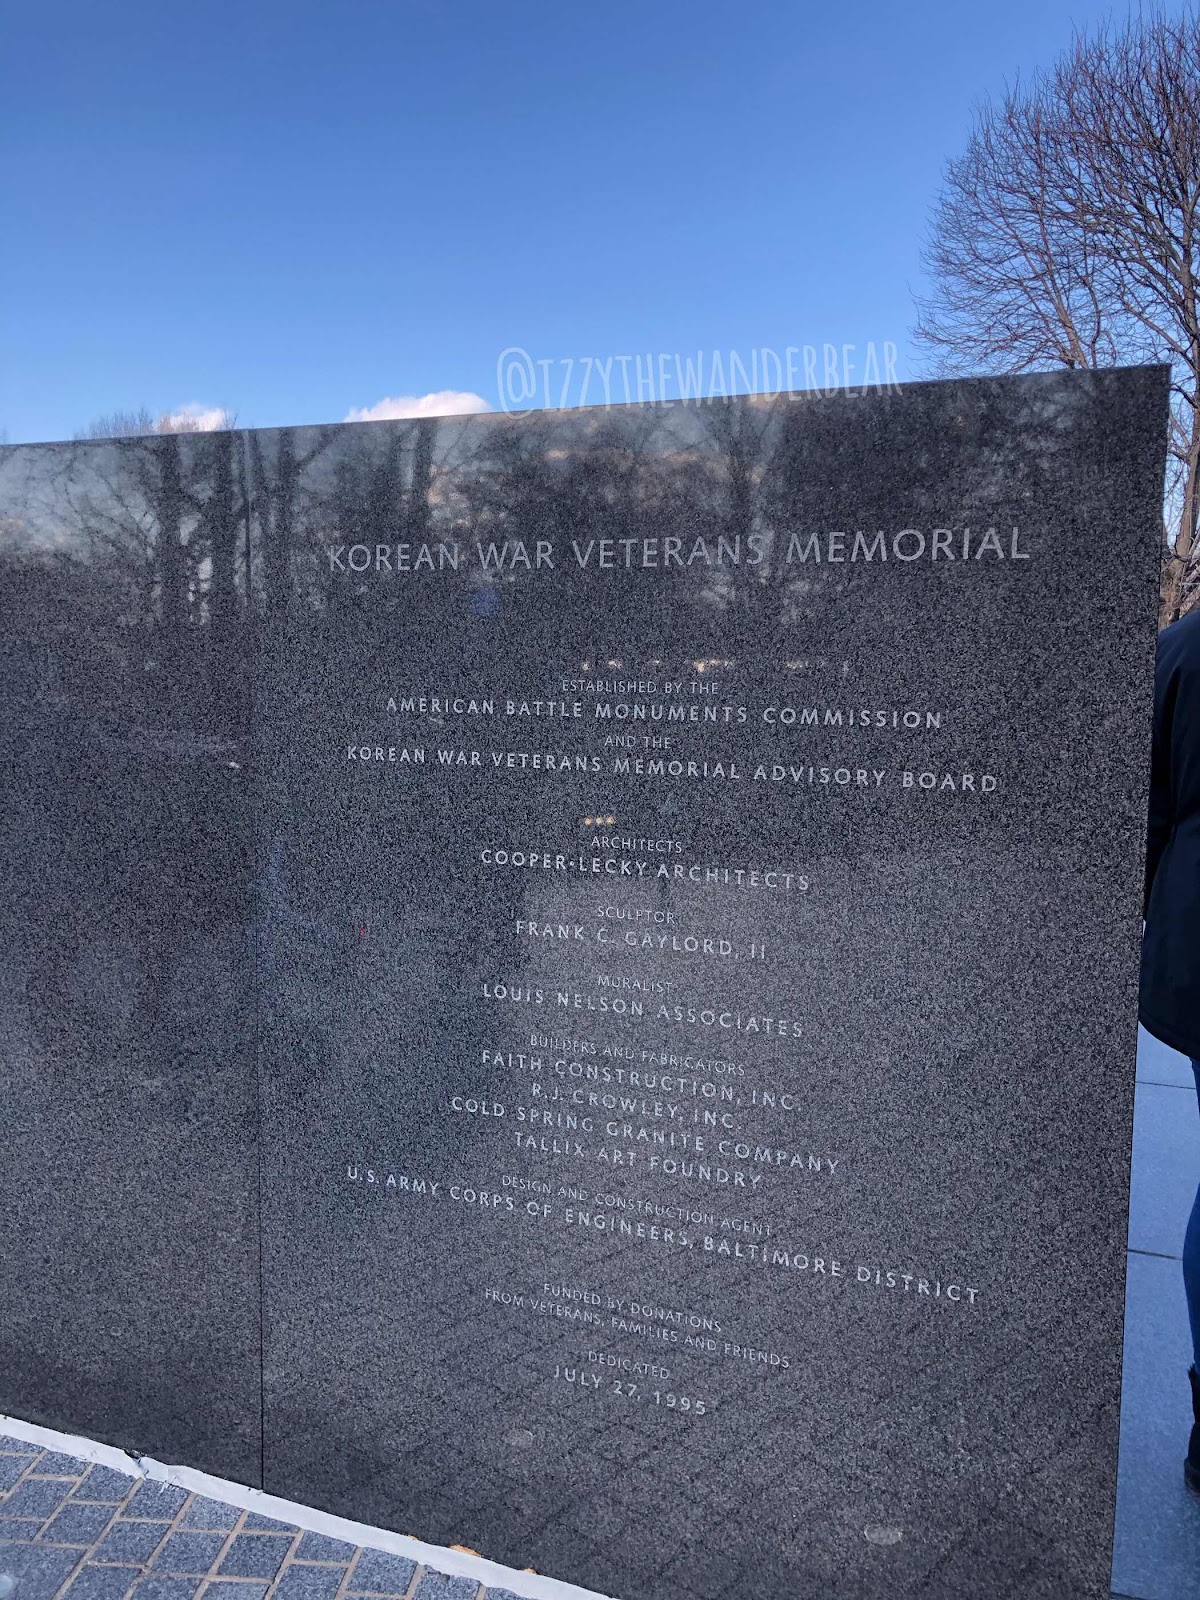 ITWB - Korean War Veteran Memorial, Washington DC